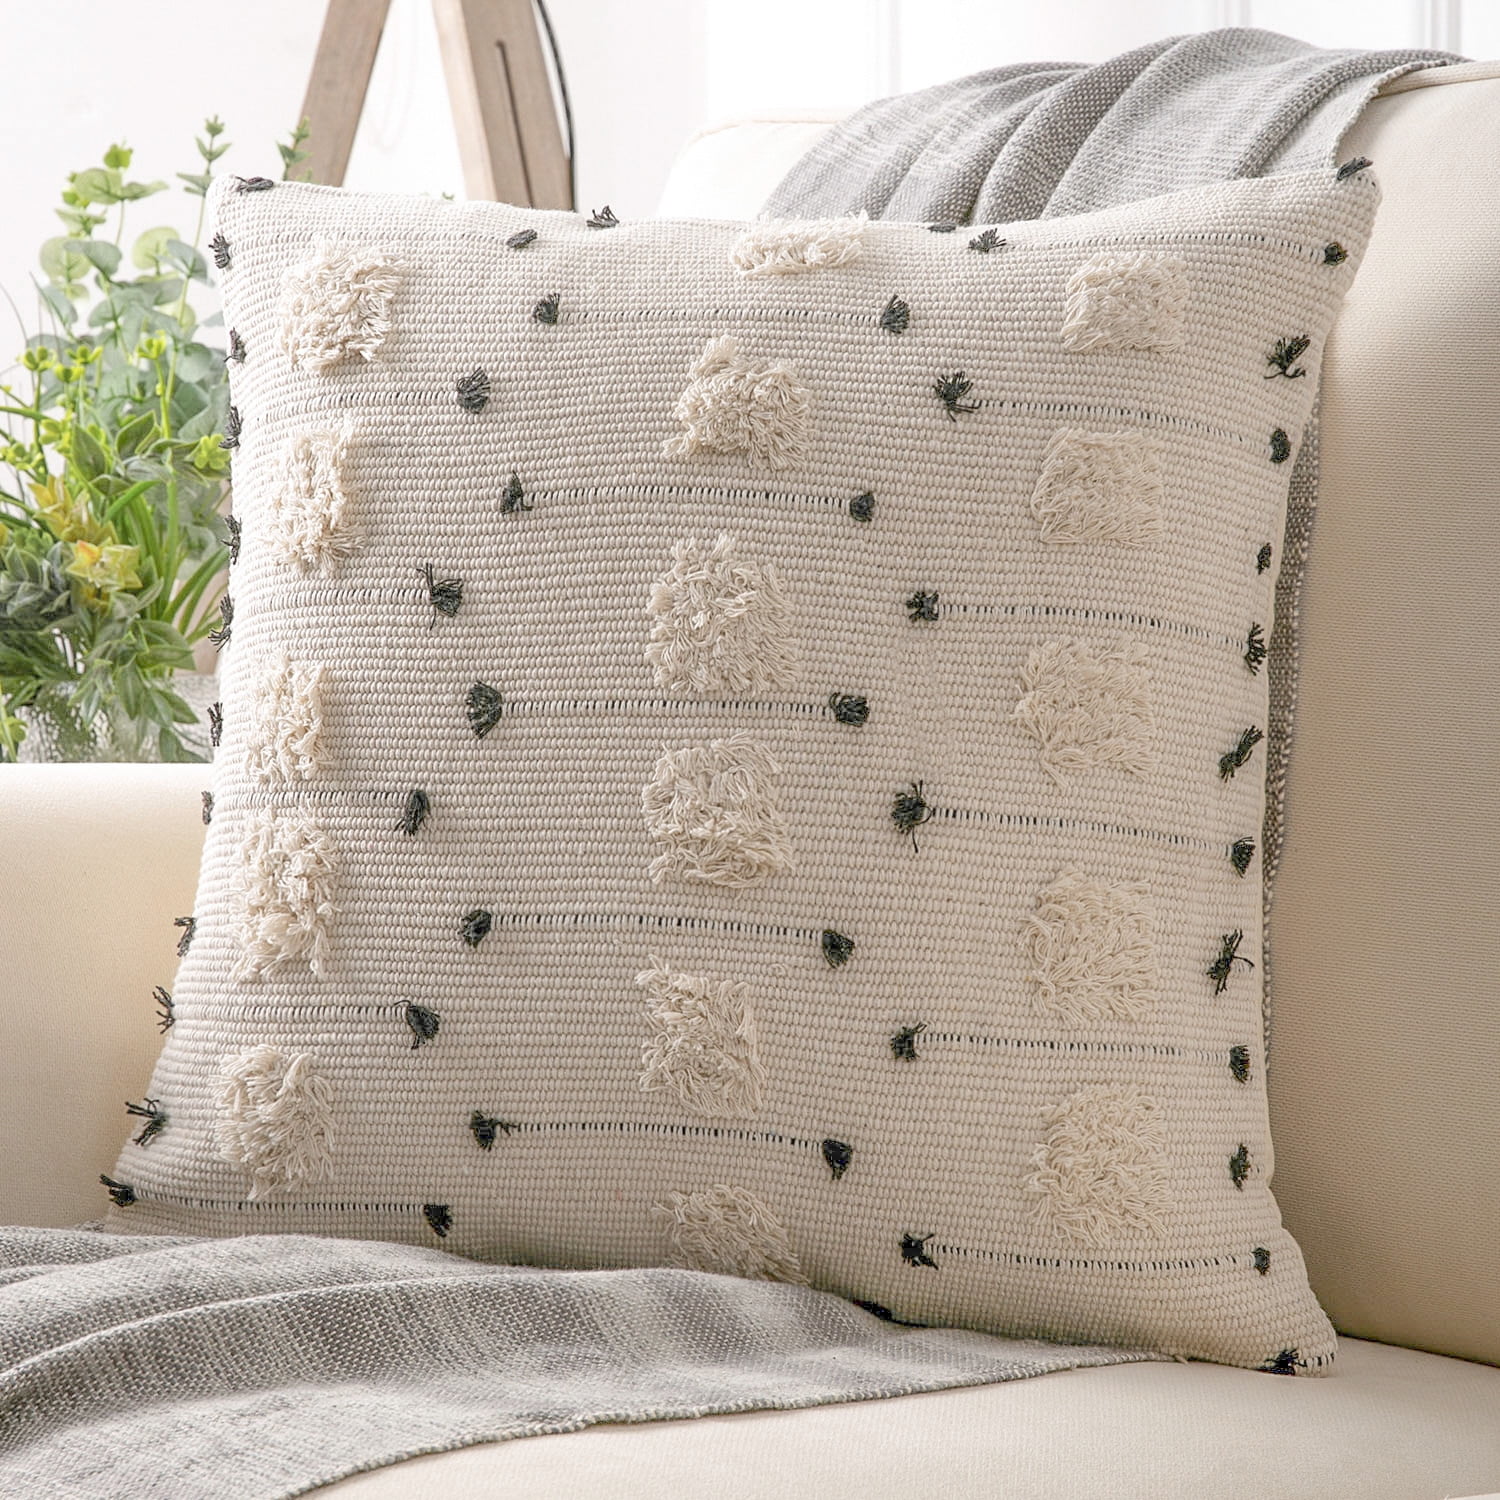 Small Lumbar Pillow Off-white and Gray Cute Lumbar Pillow  Cover-handmade-handwoven Decorative Pillow Bohemian Lumbar Bohemian Pillow  